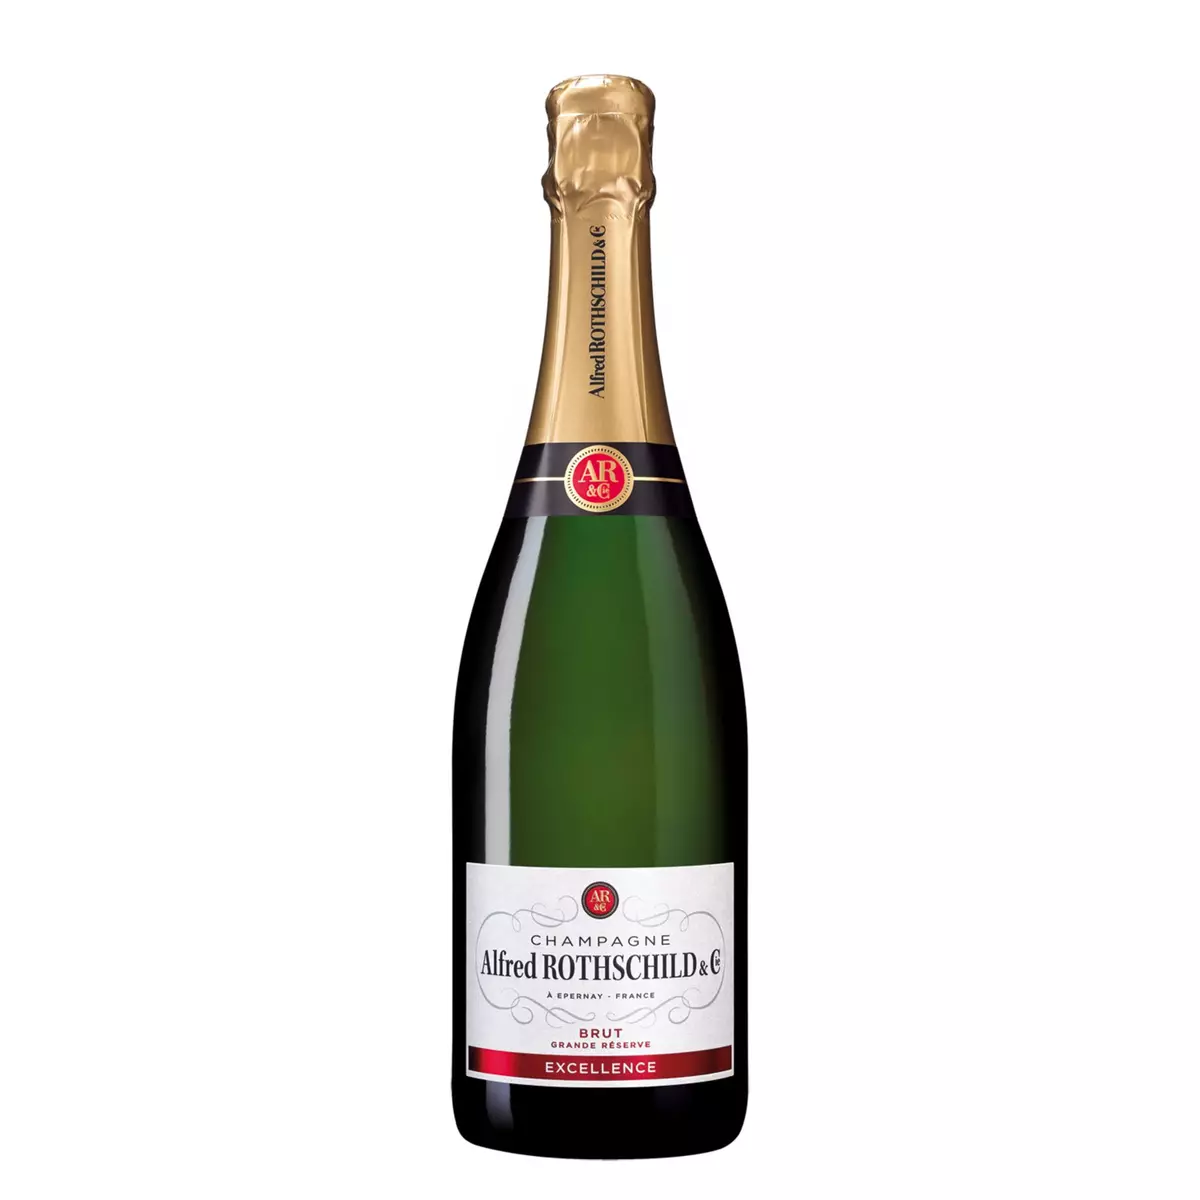 ALFRED ROTHSCHILD & CIE AOP Champagne Cuvée Excellence brut 75cl